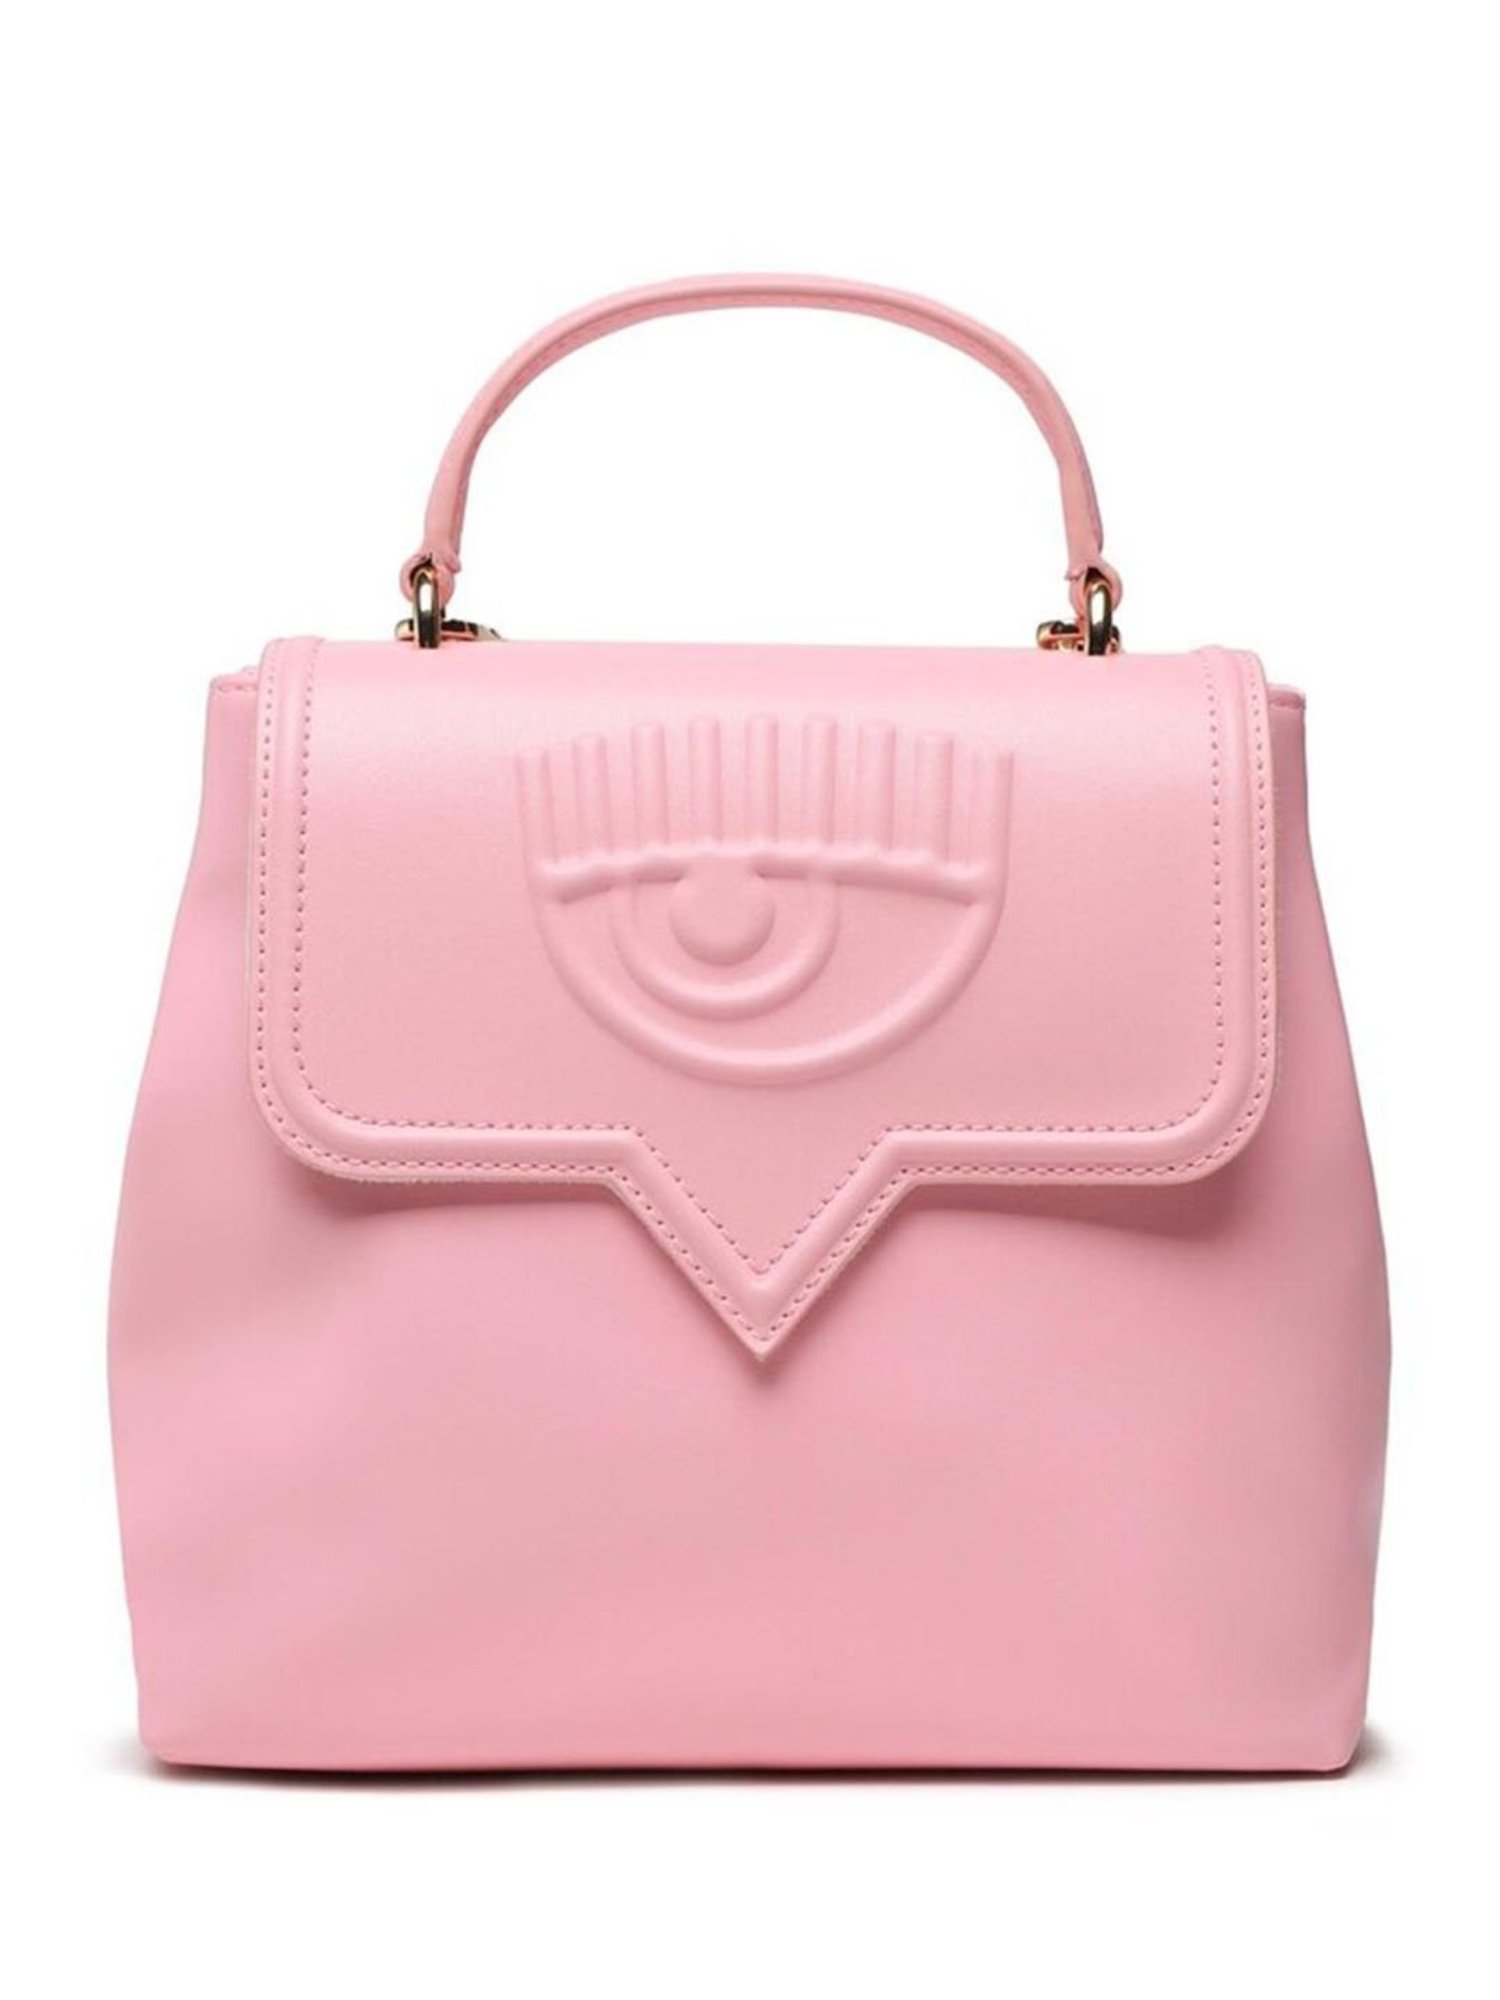 Buy Carpisa Black Small Cross Body Bag for Women Online @ Tata CLiQ Luxury